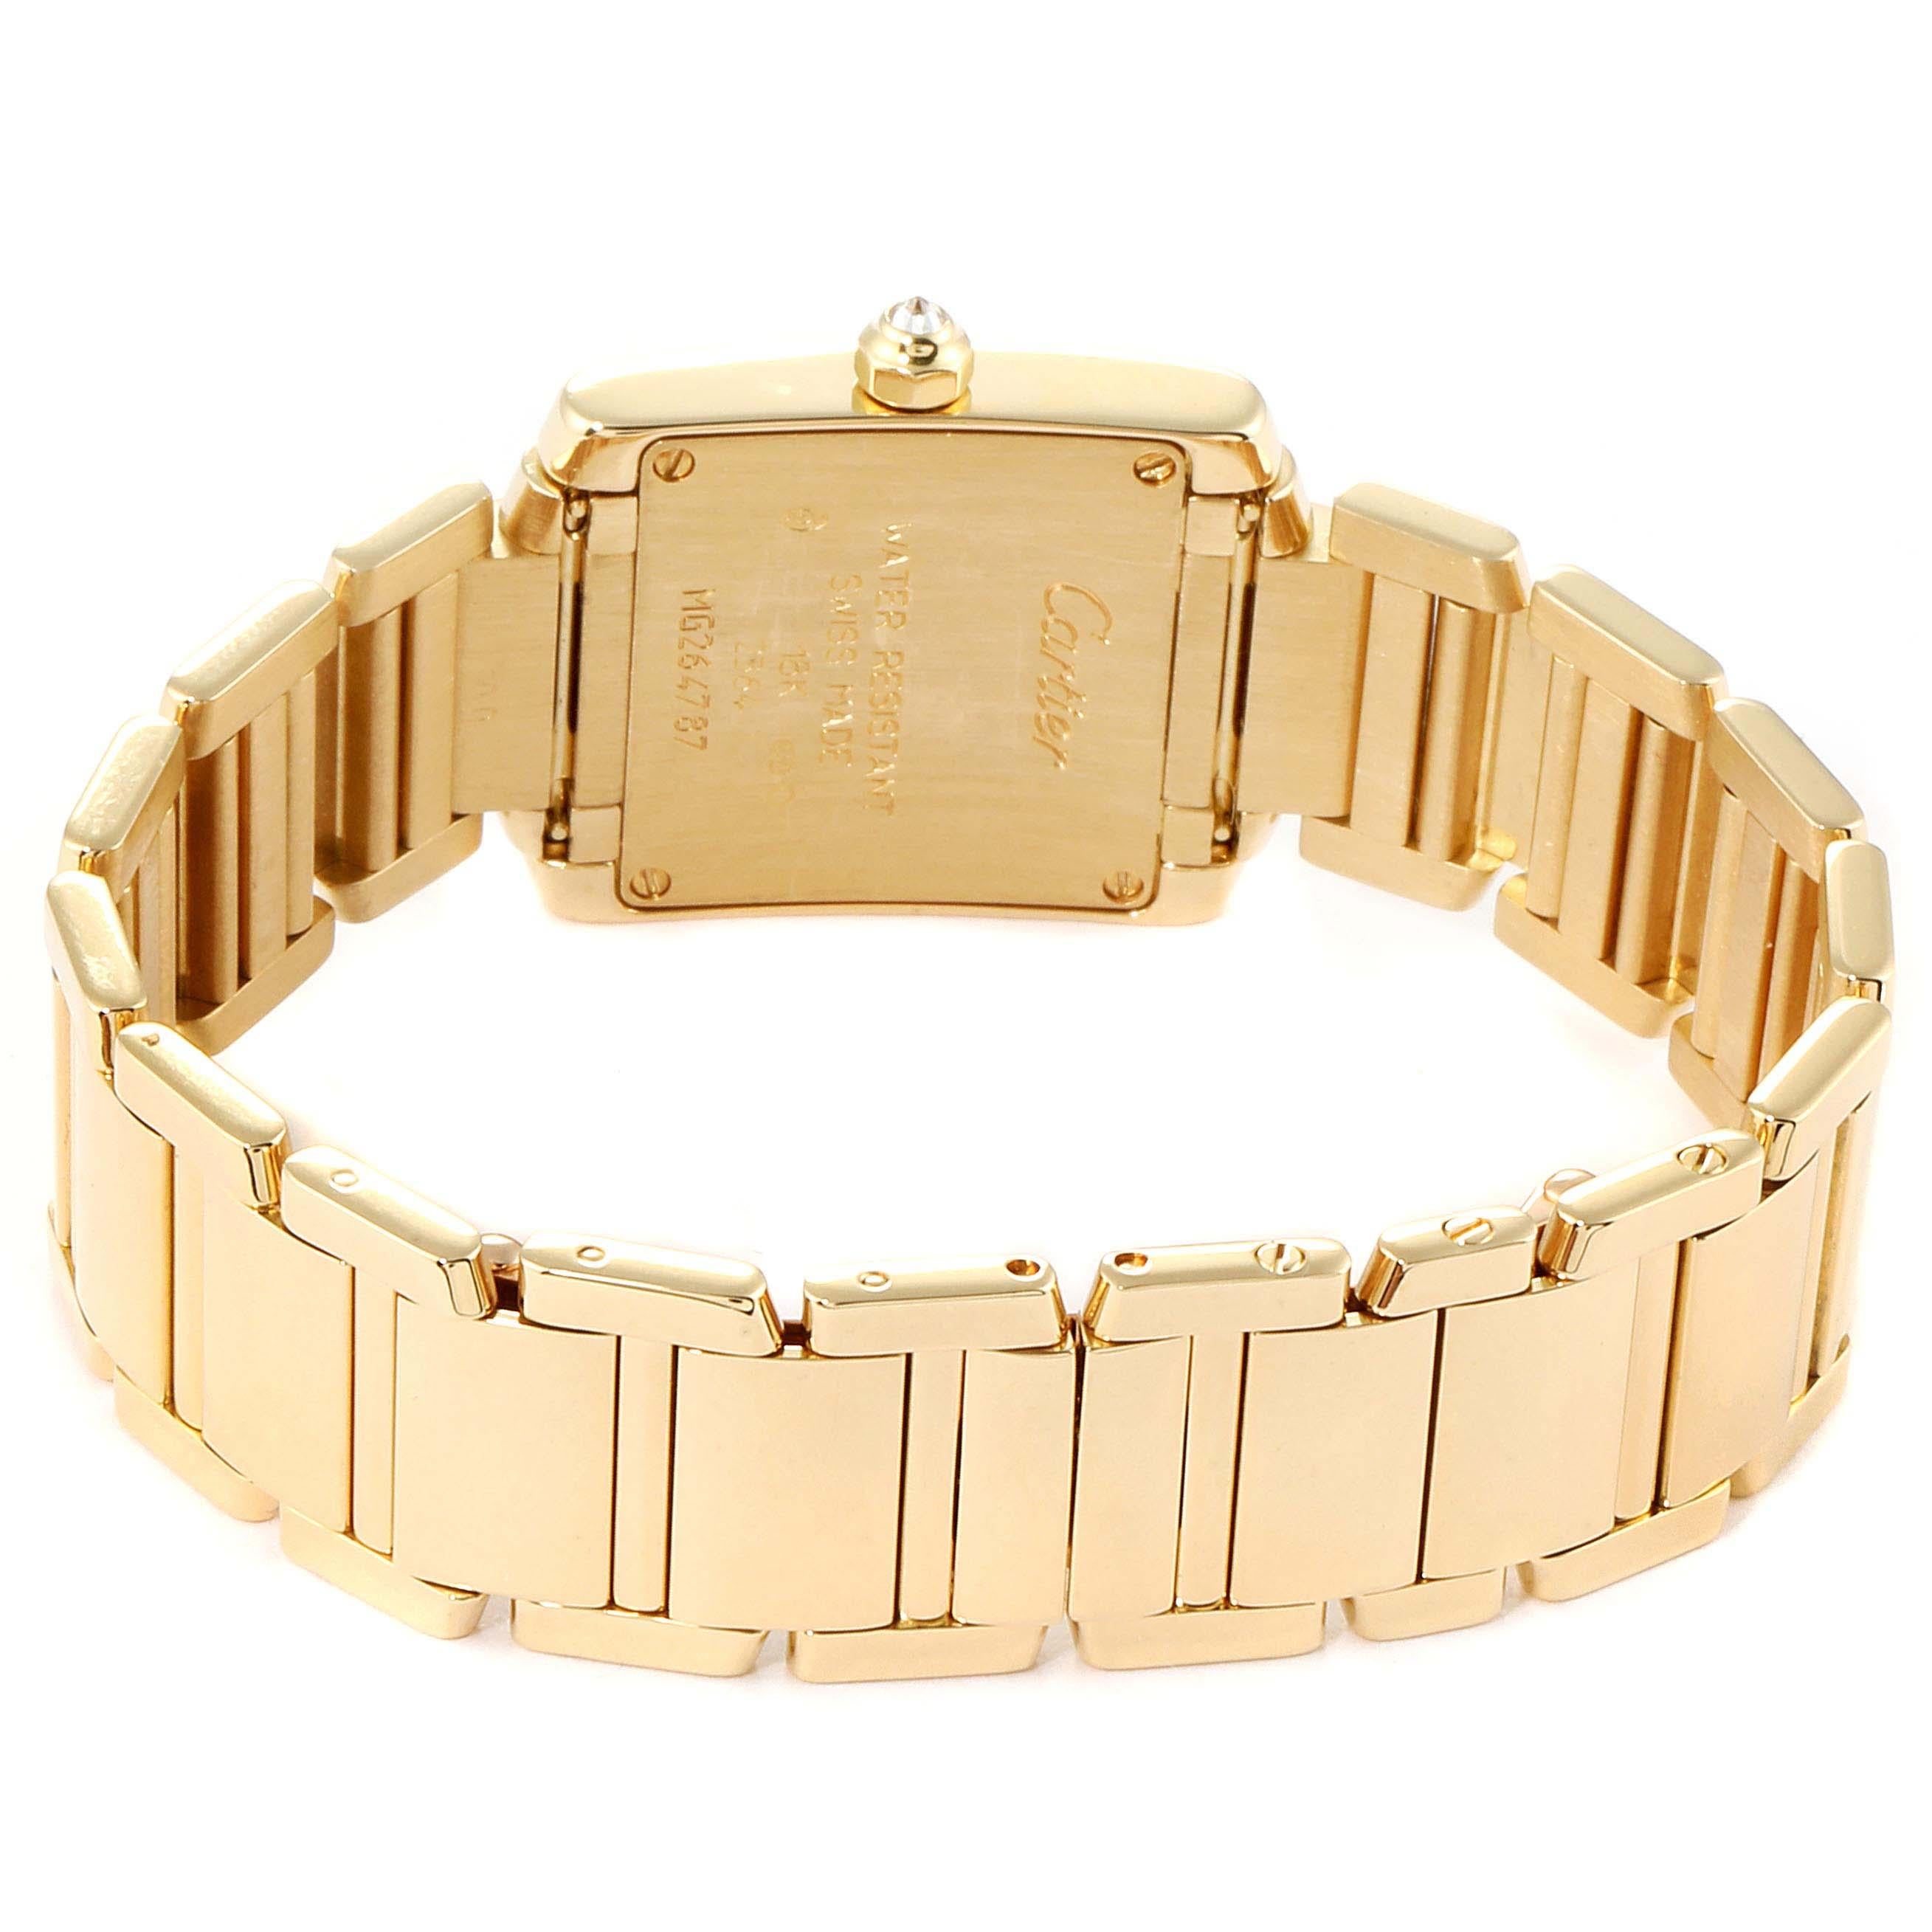 Cartier Tank Francaise 18 Karat Yellow Gold Diamond Ladies Watch WE1001R8 For Sale 3